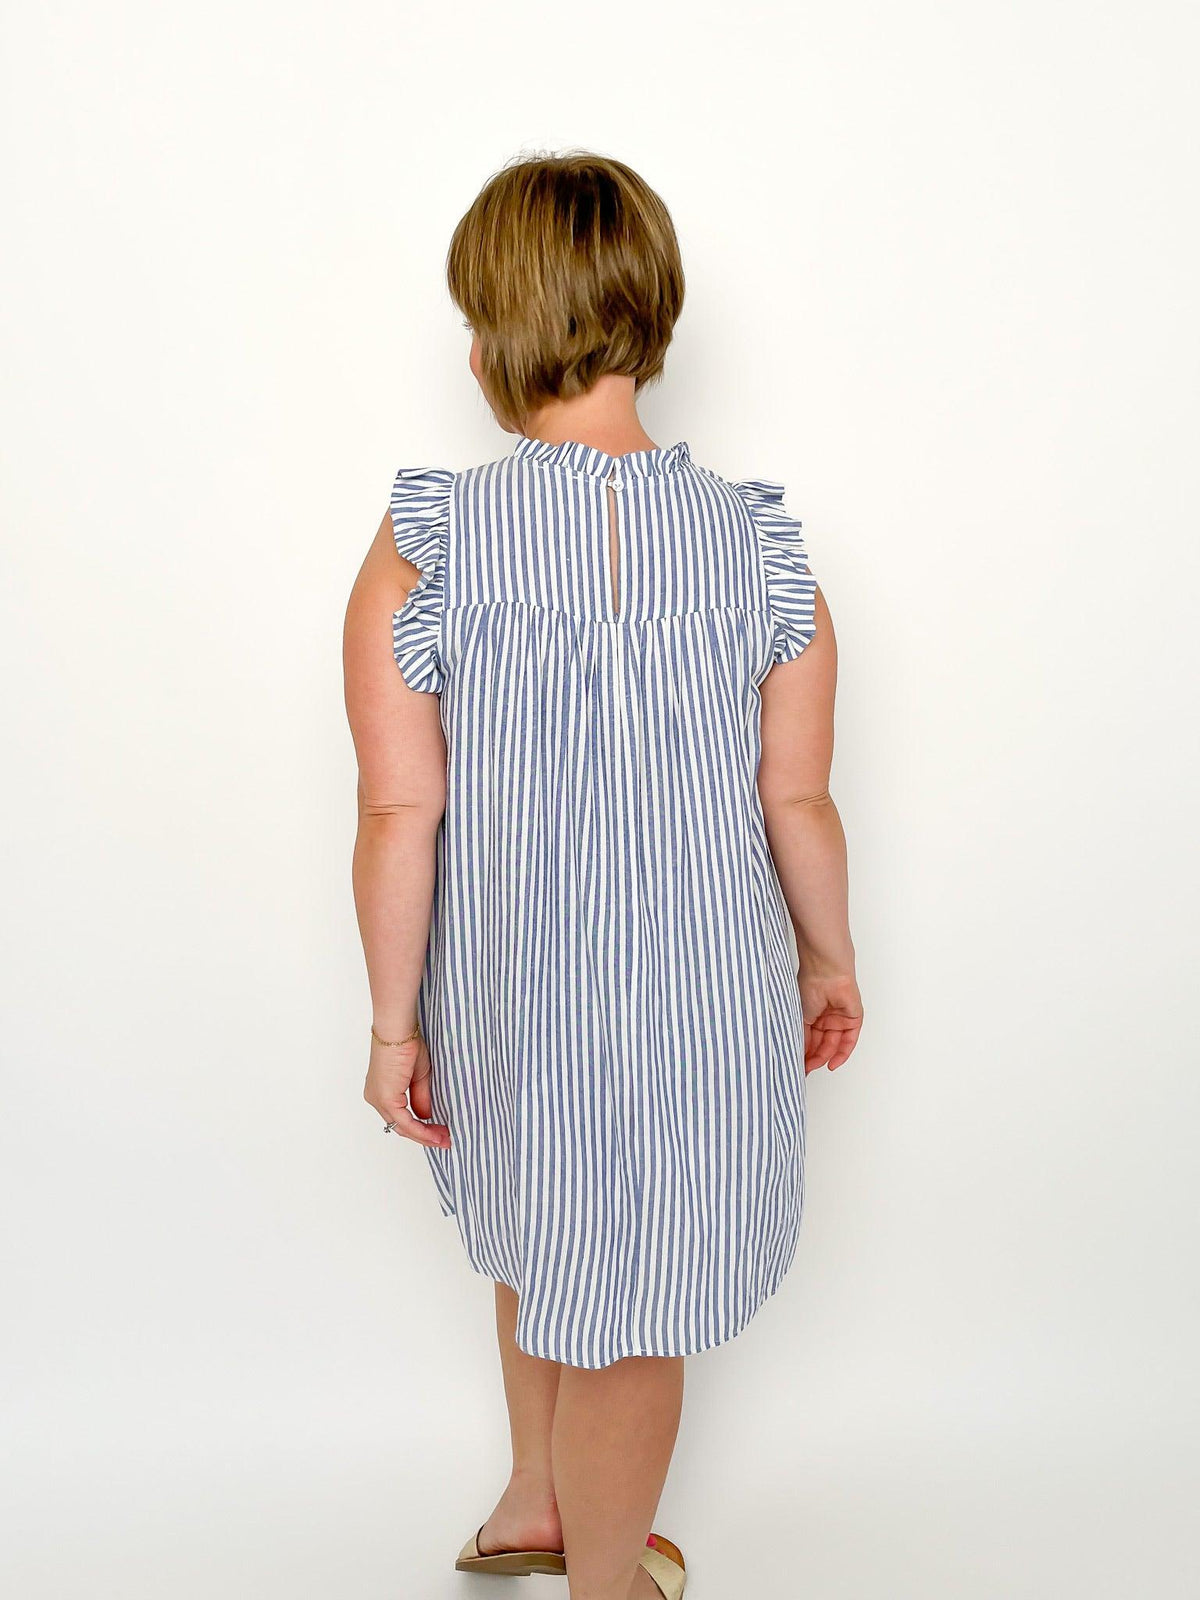 Blue Striped Dress - SLS Wares